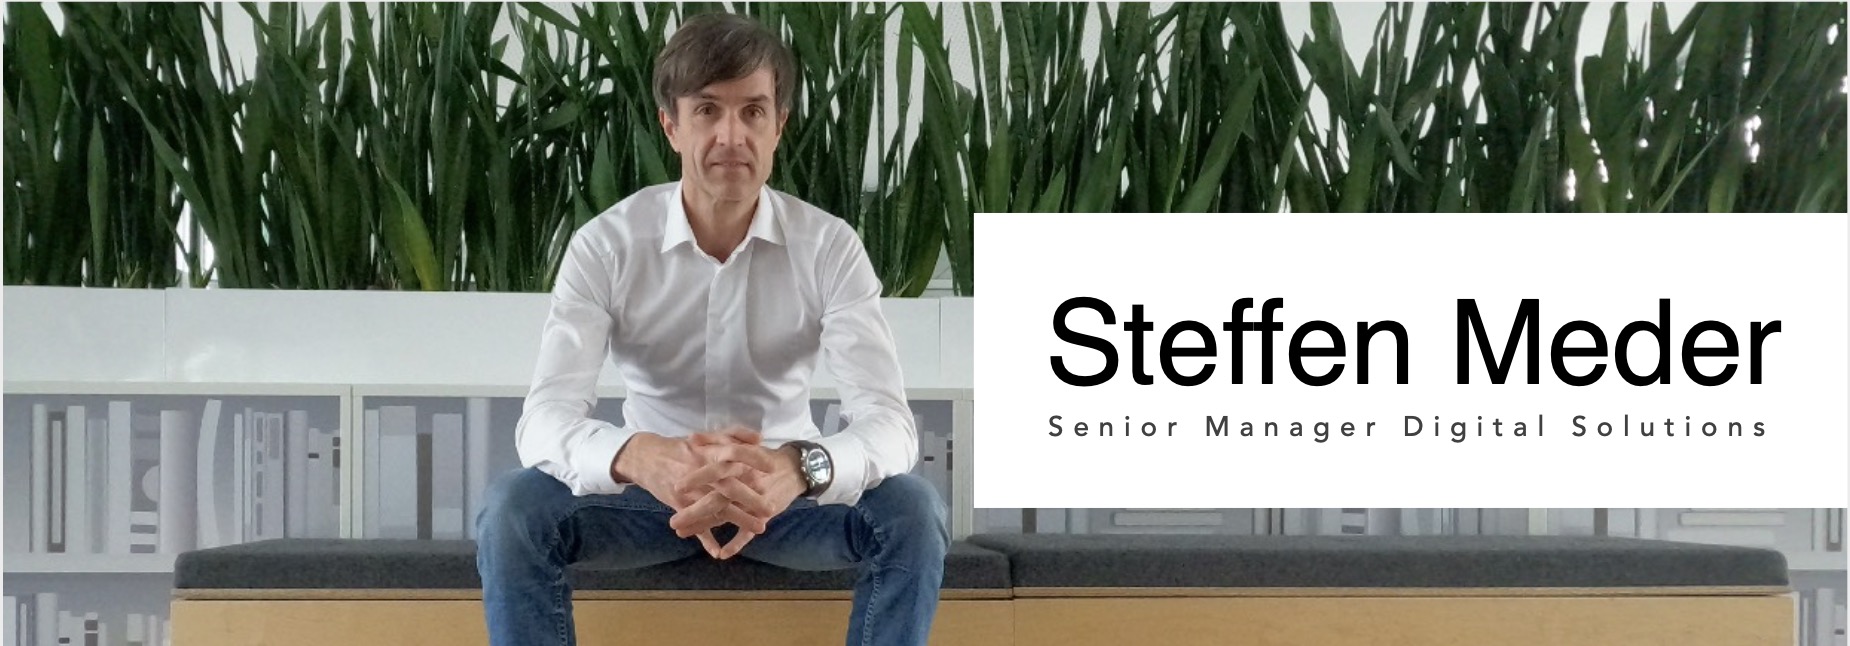 Steffen Meder - Senior Manager Digital Solutions